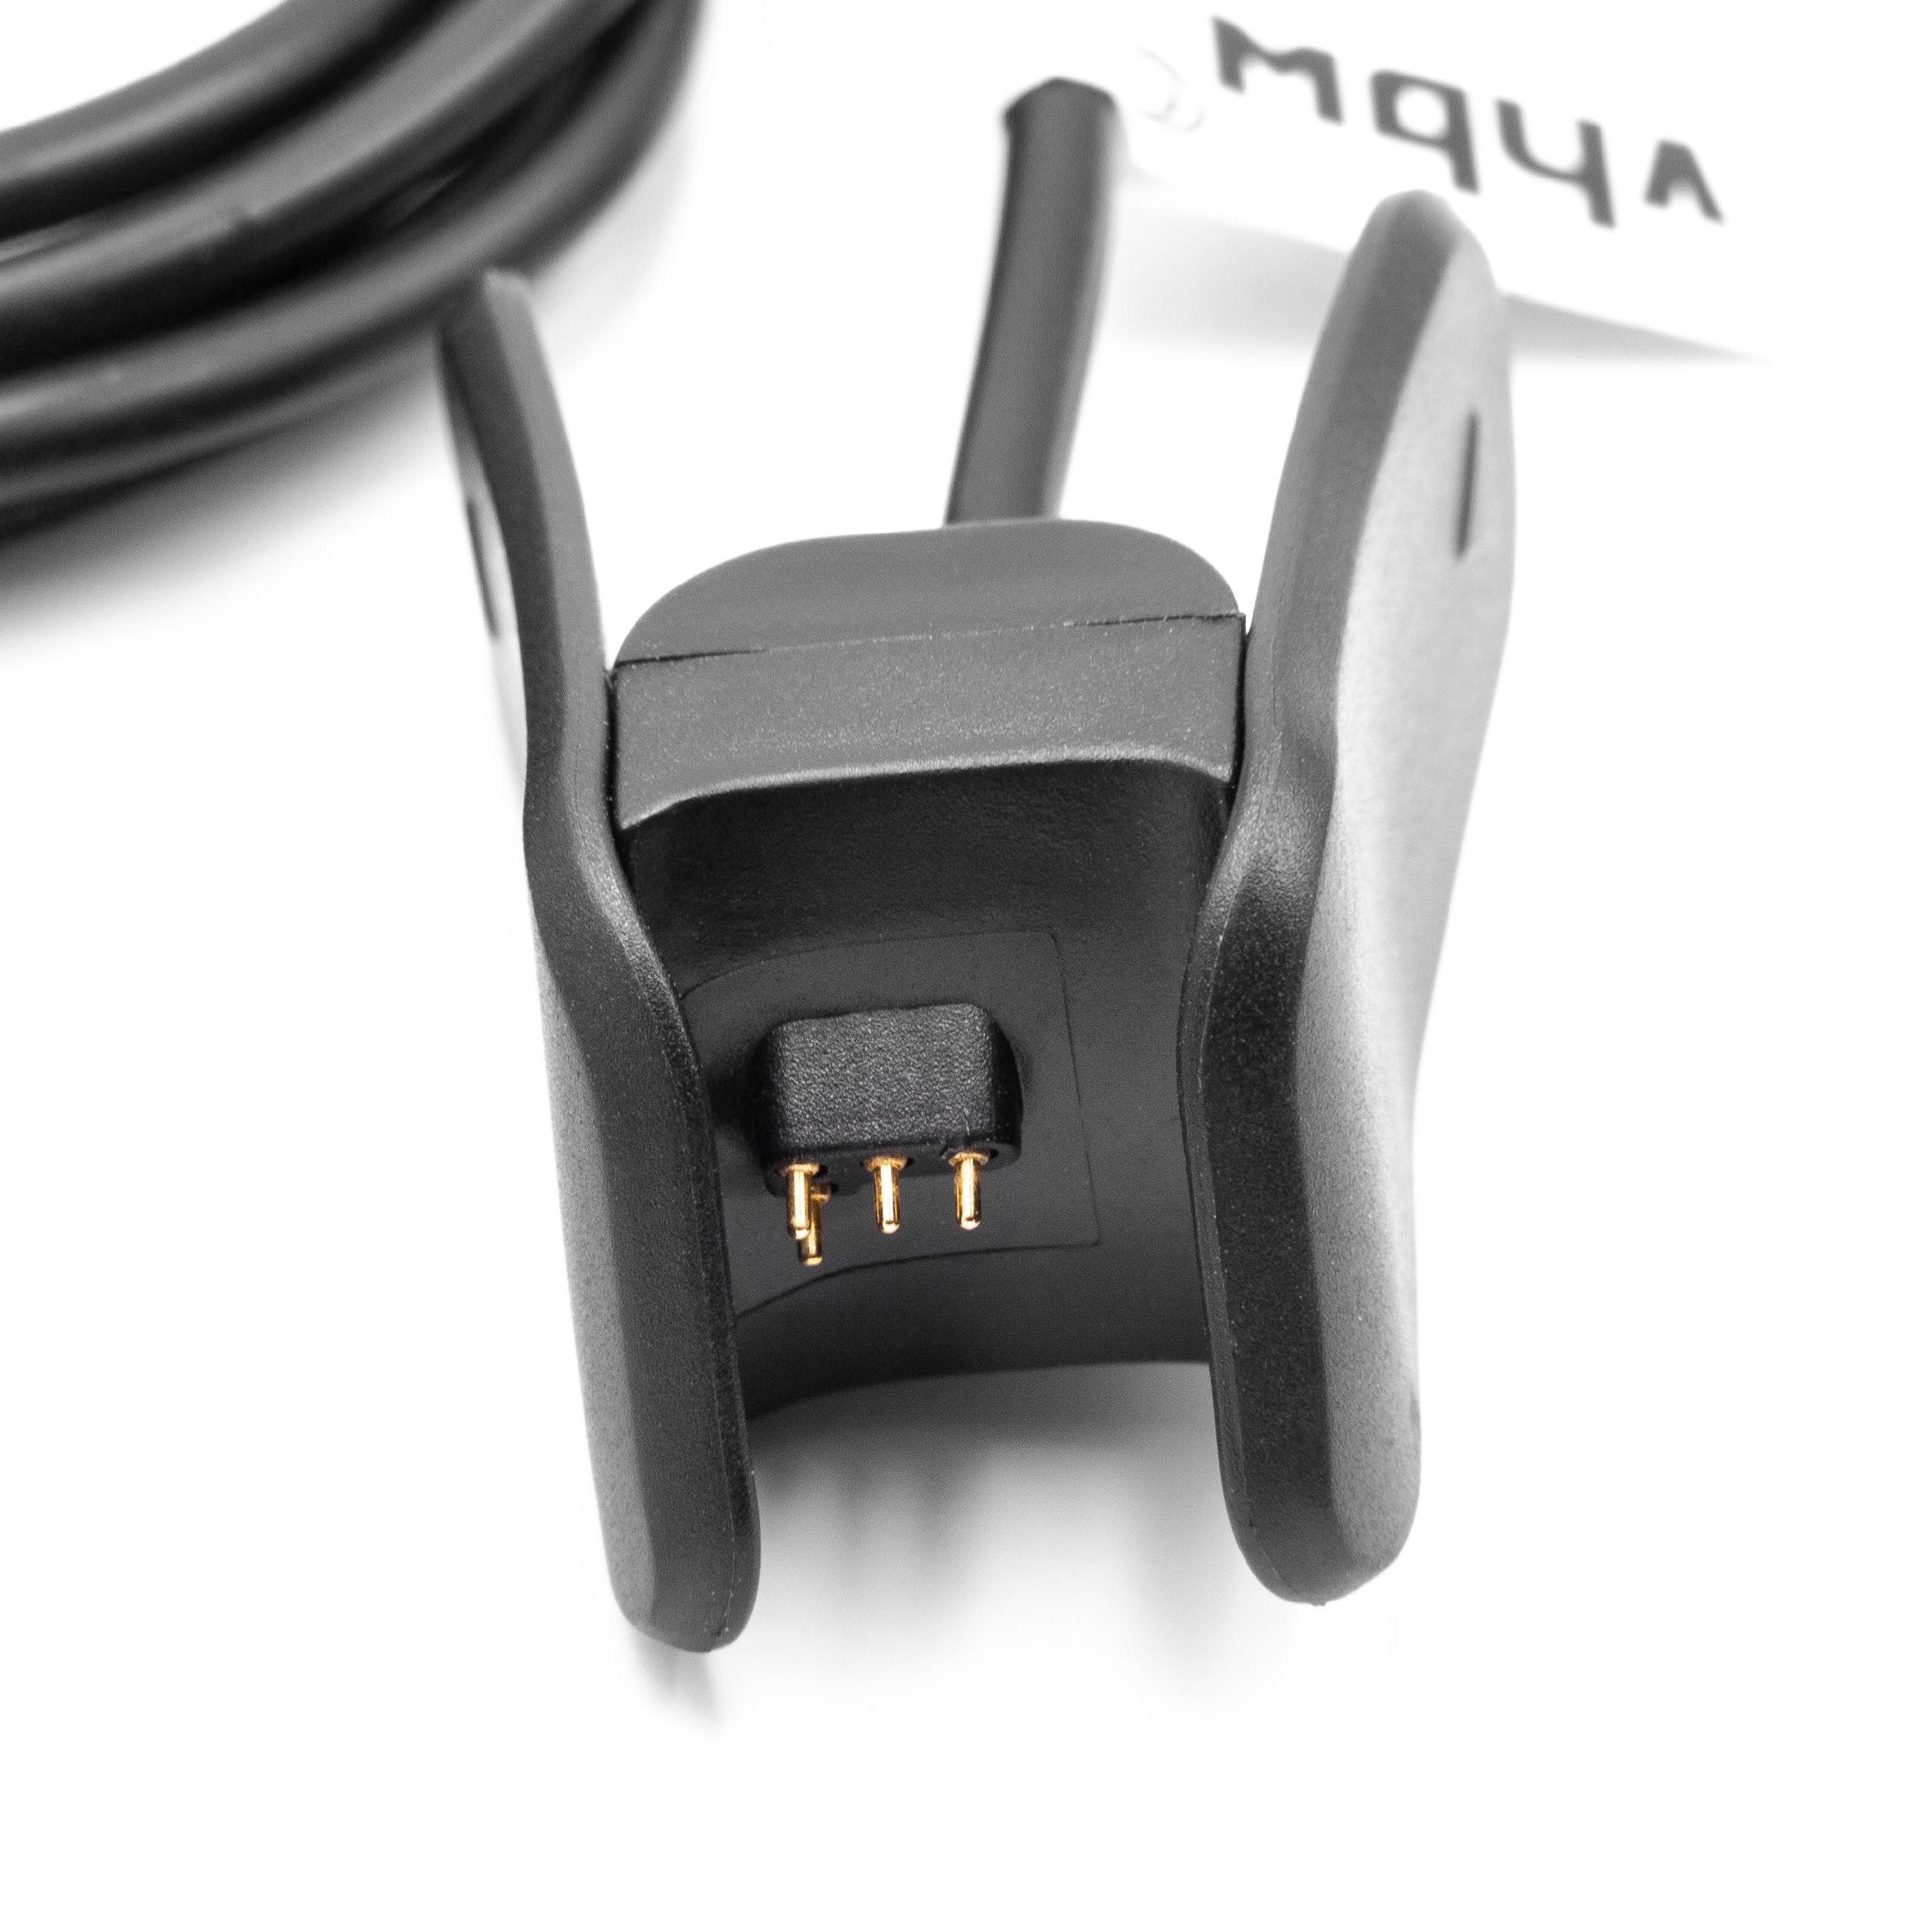 Charging Cable suitable for Garmin Vivosmart 4 Fitness Tracker - Cable, 94cm, black